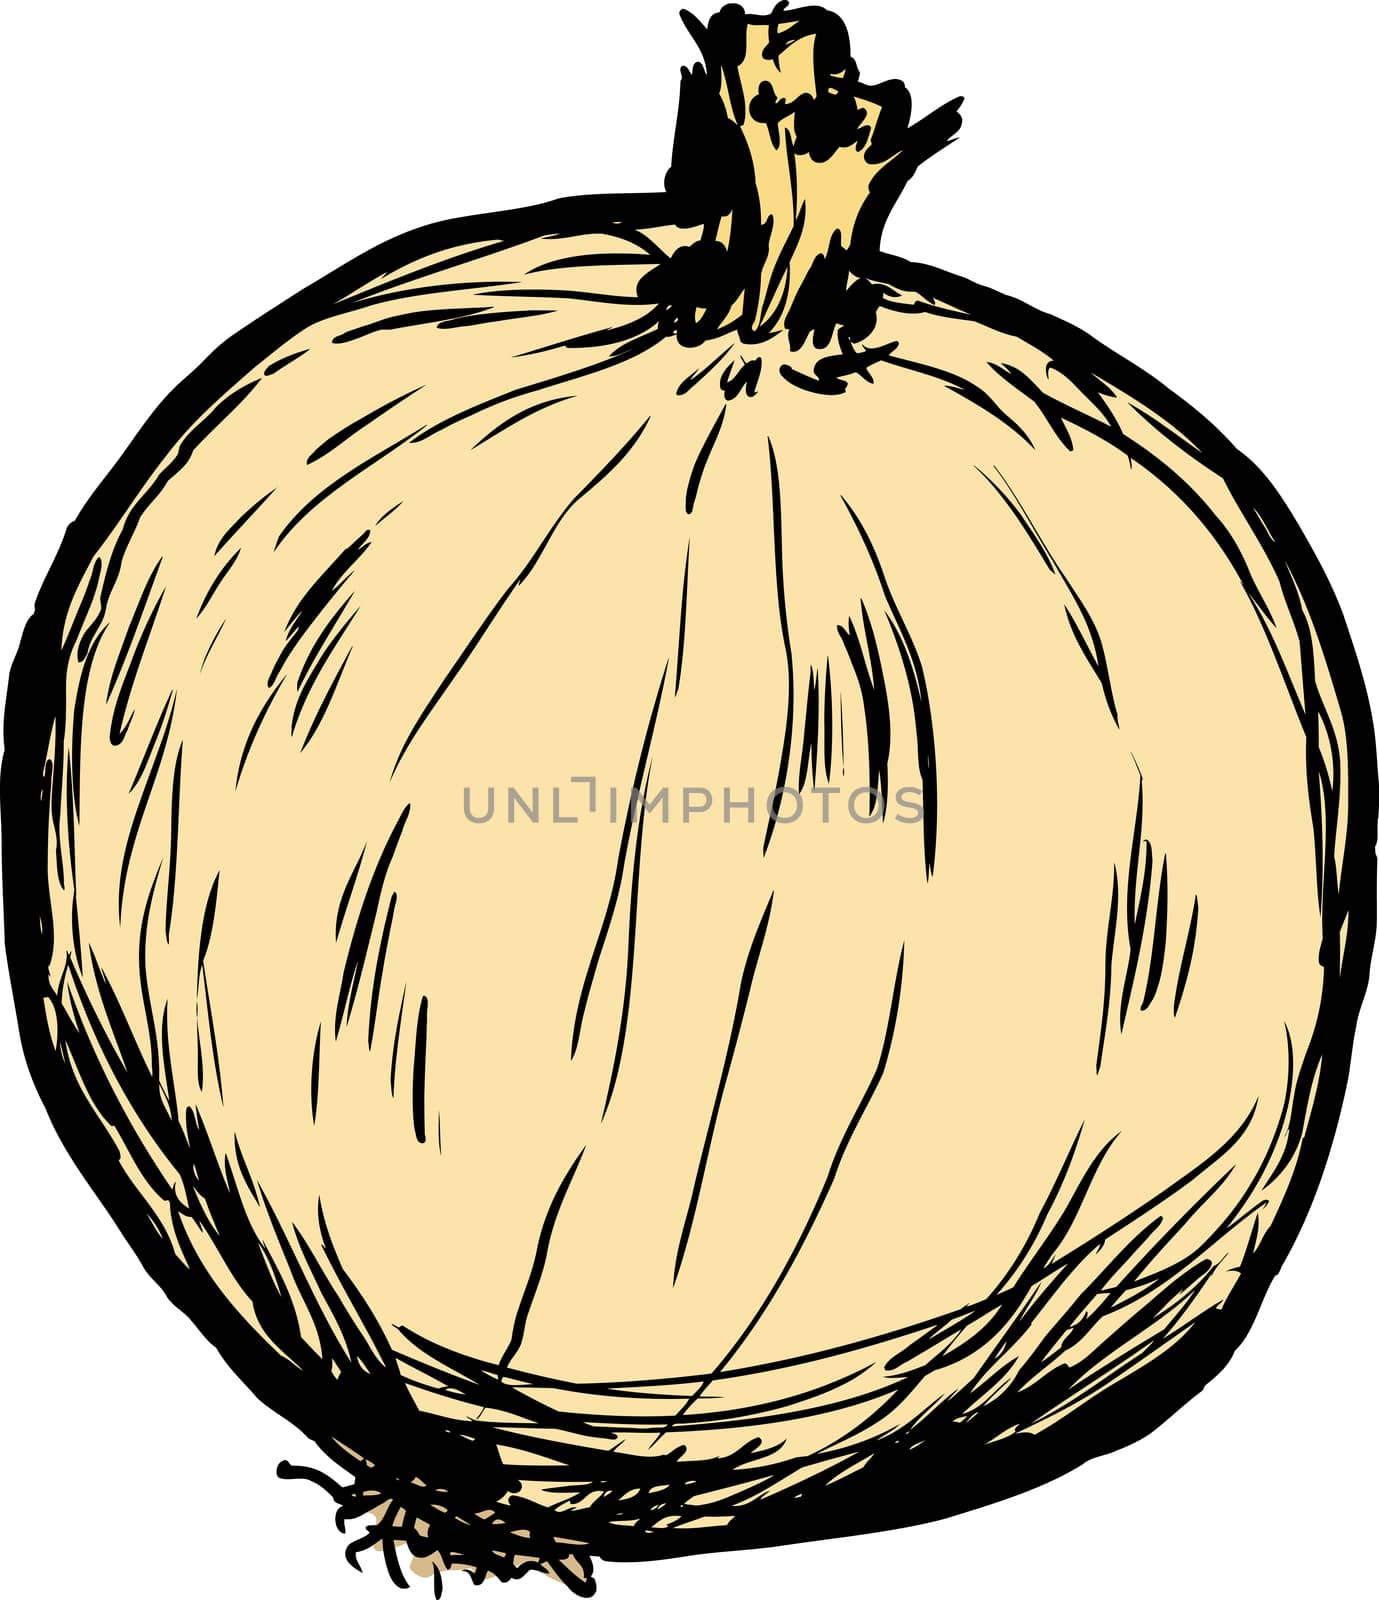 Hand drawn single raw white onion with skin cartoon over white background